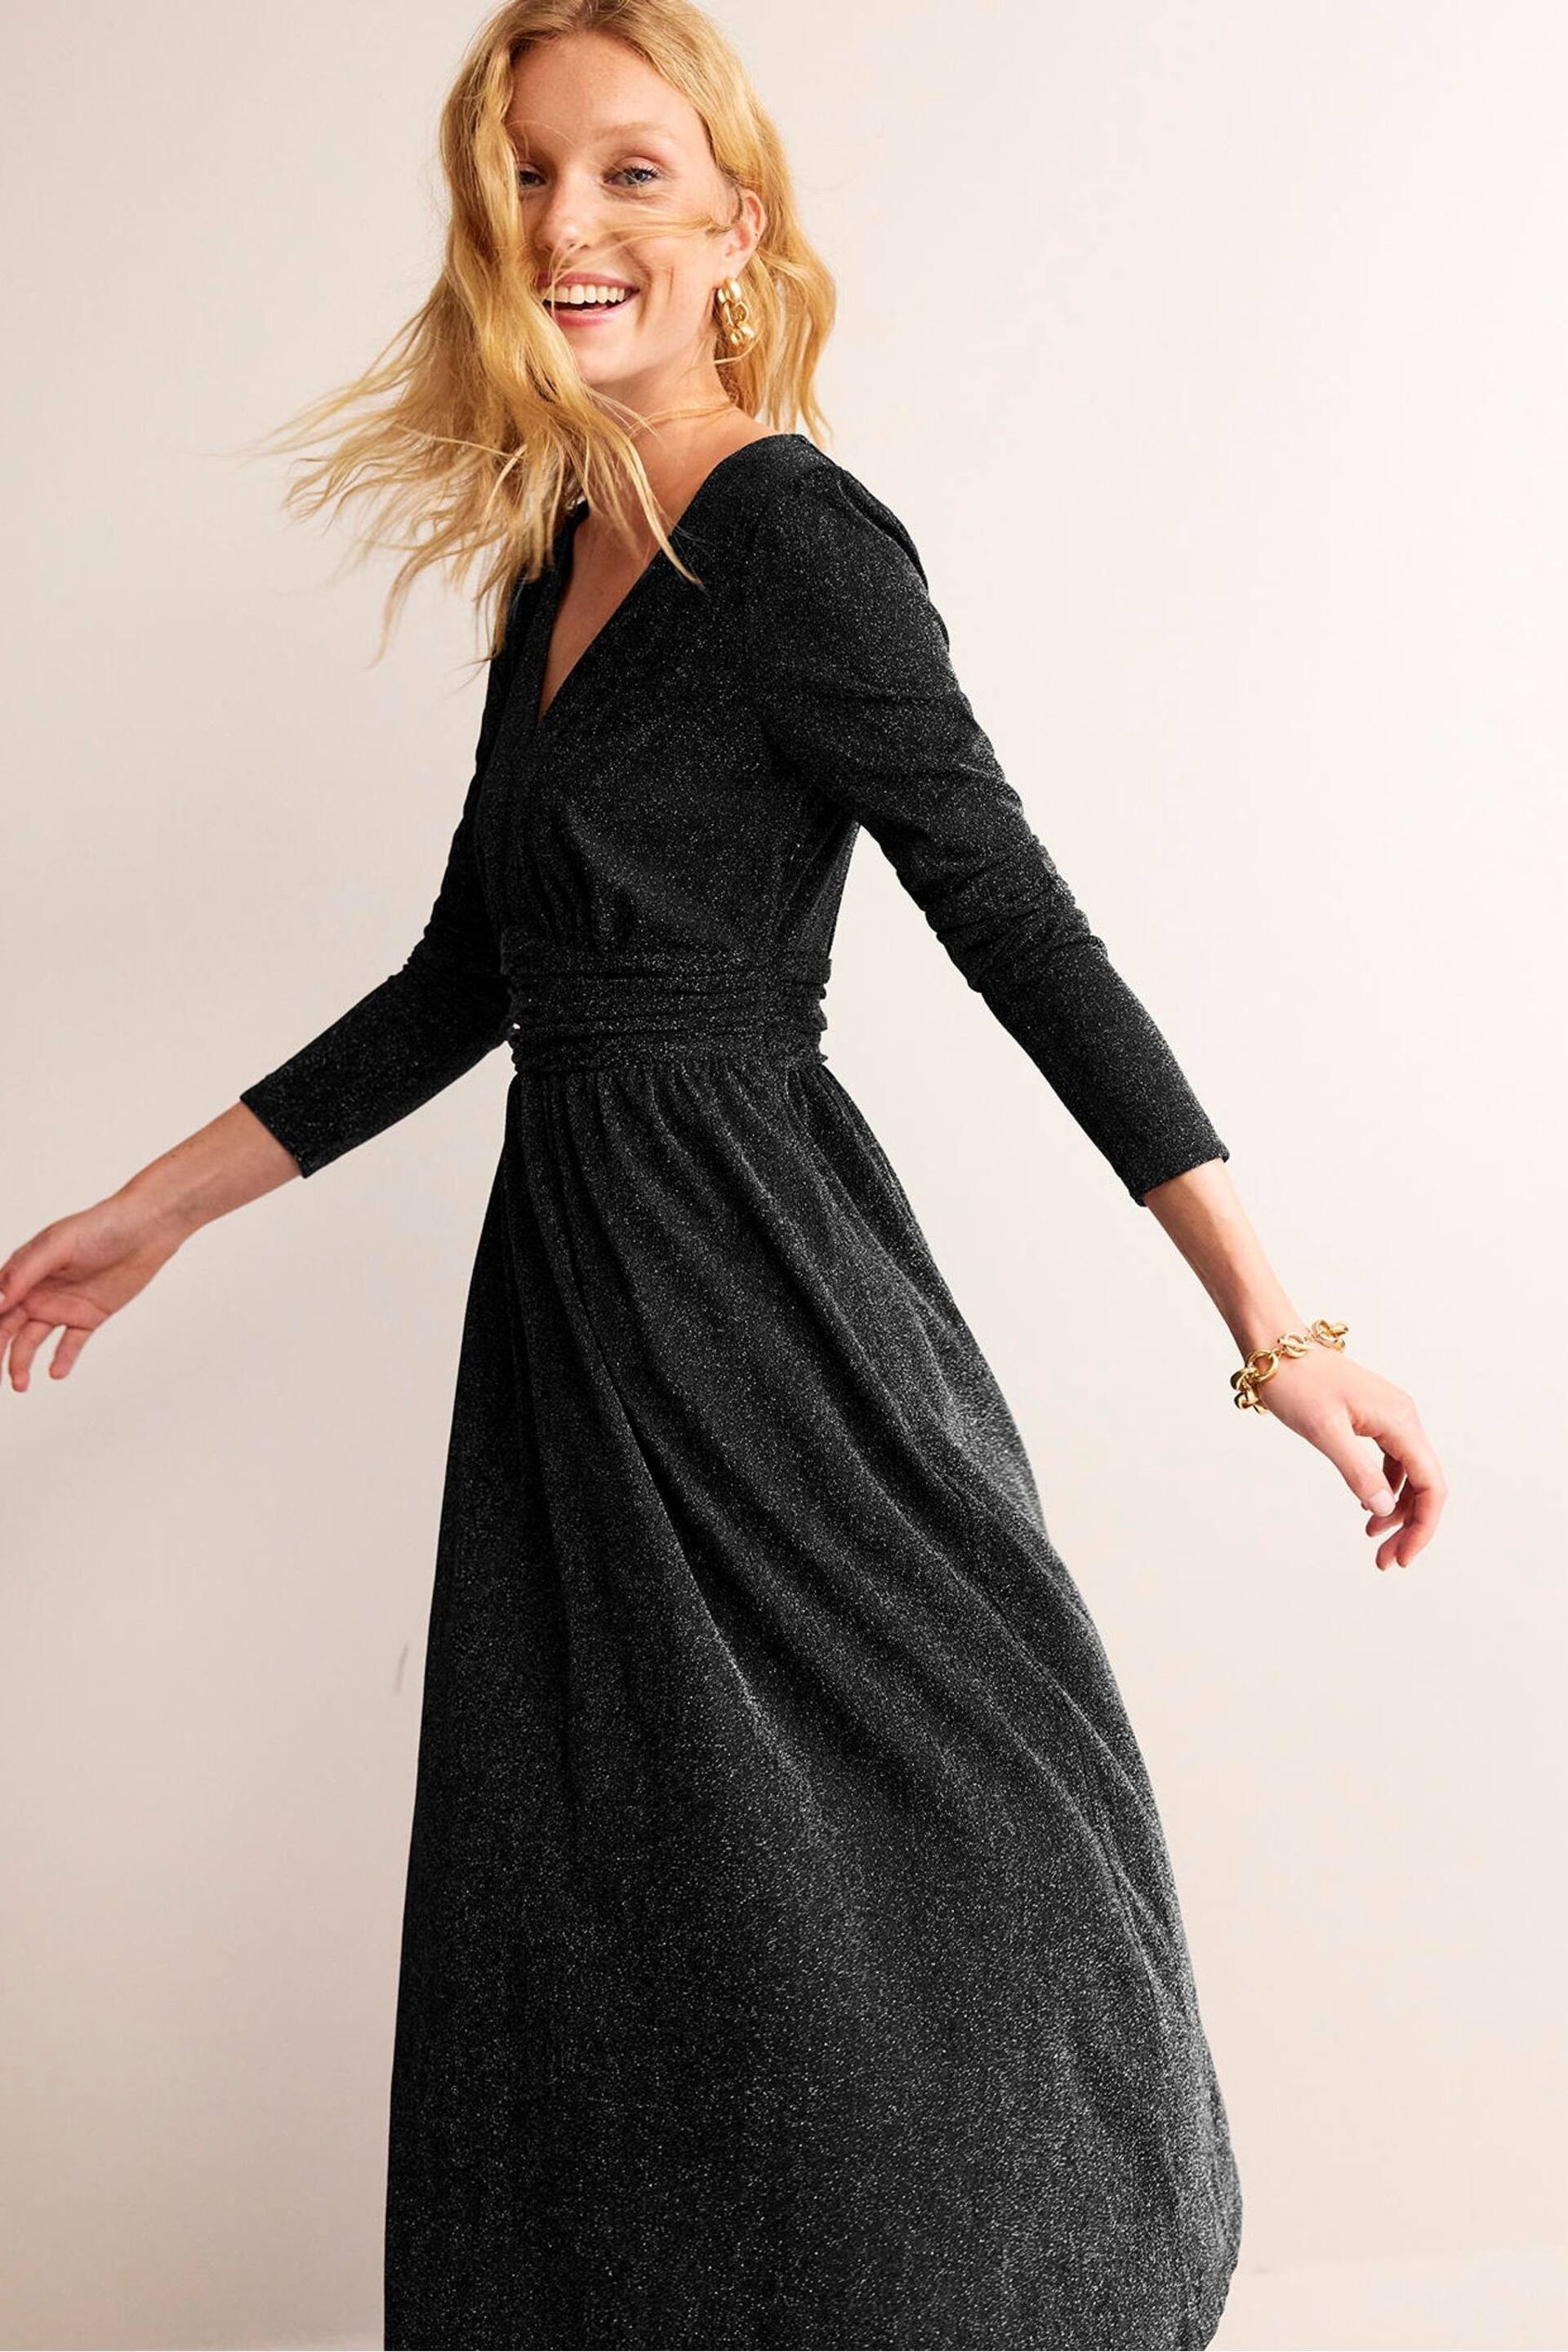 Boden Black Ruched Sparkle Midi Dress - Image 1 of 4